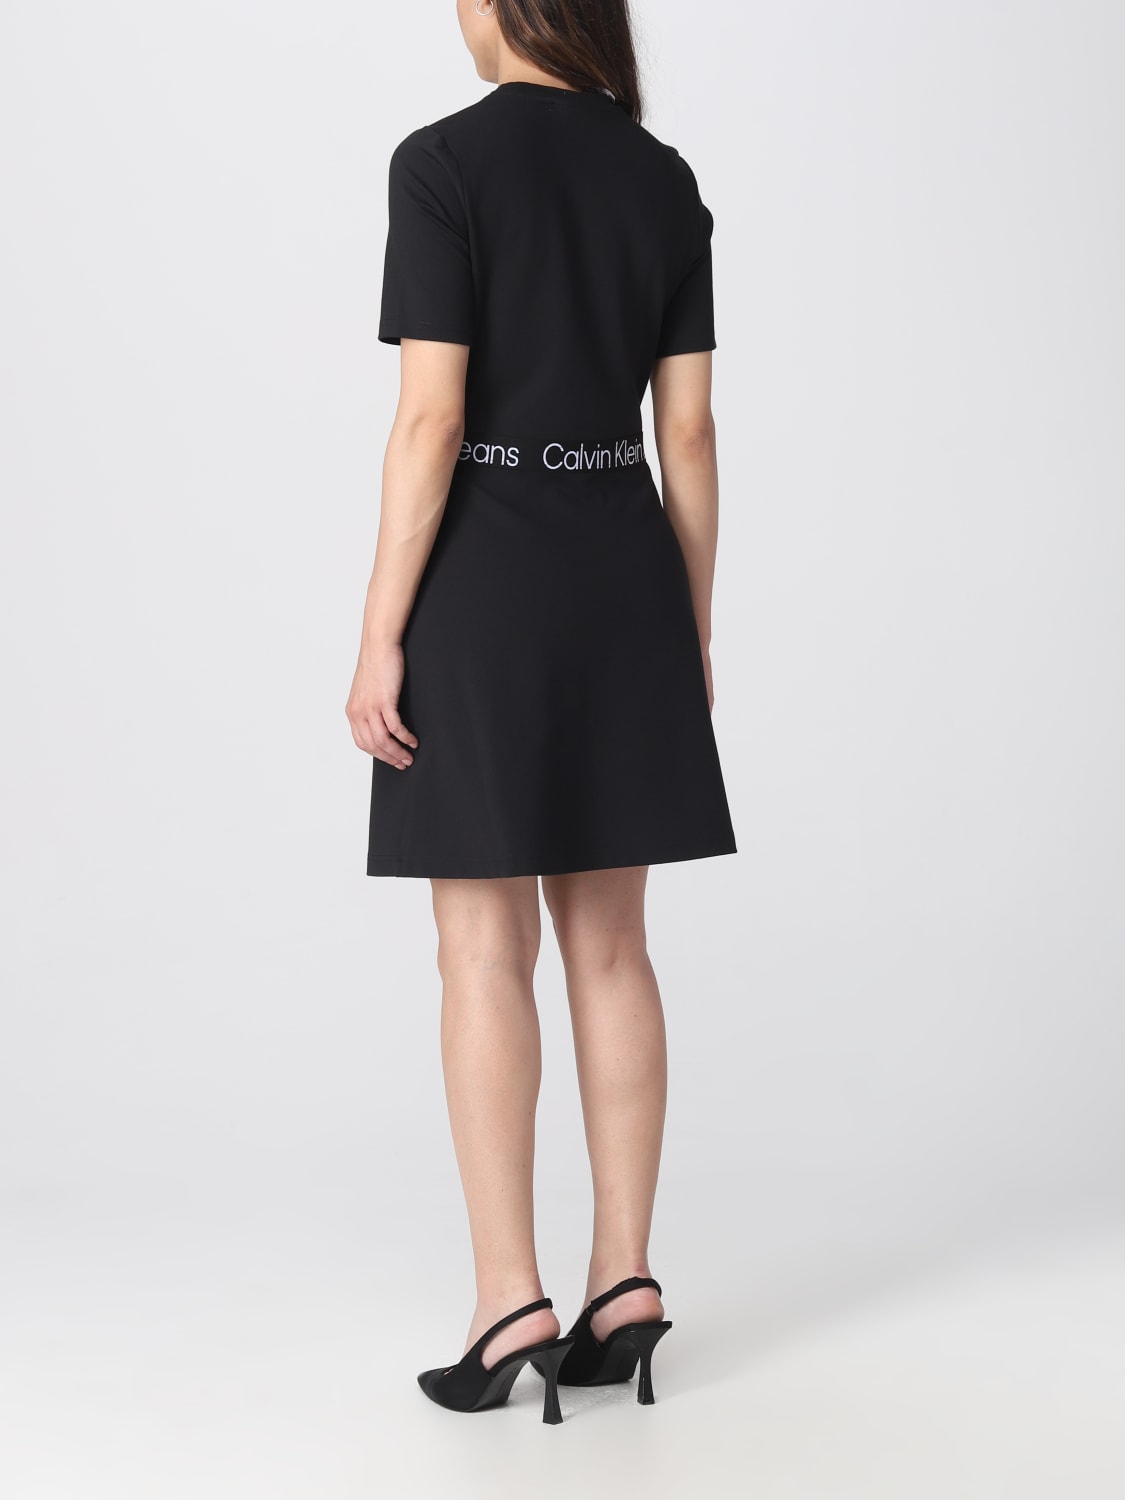 CALVIN KLEIN JEANS: dress | Calvin dress Black Klein online woman for J20J221408 - at Jeans